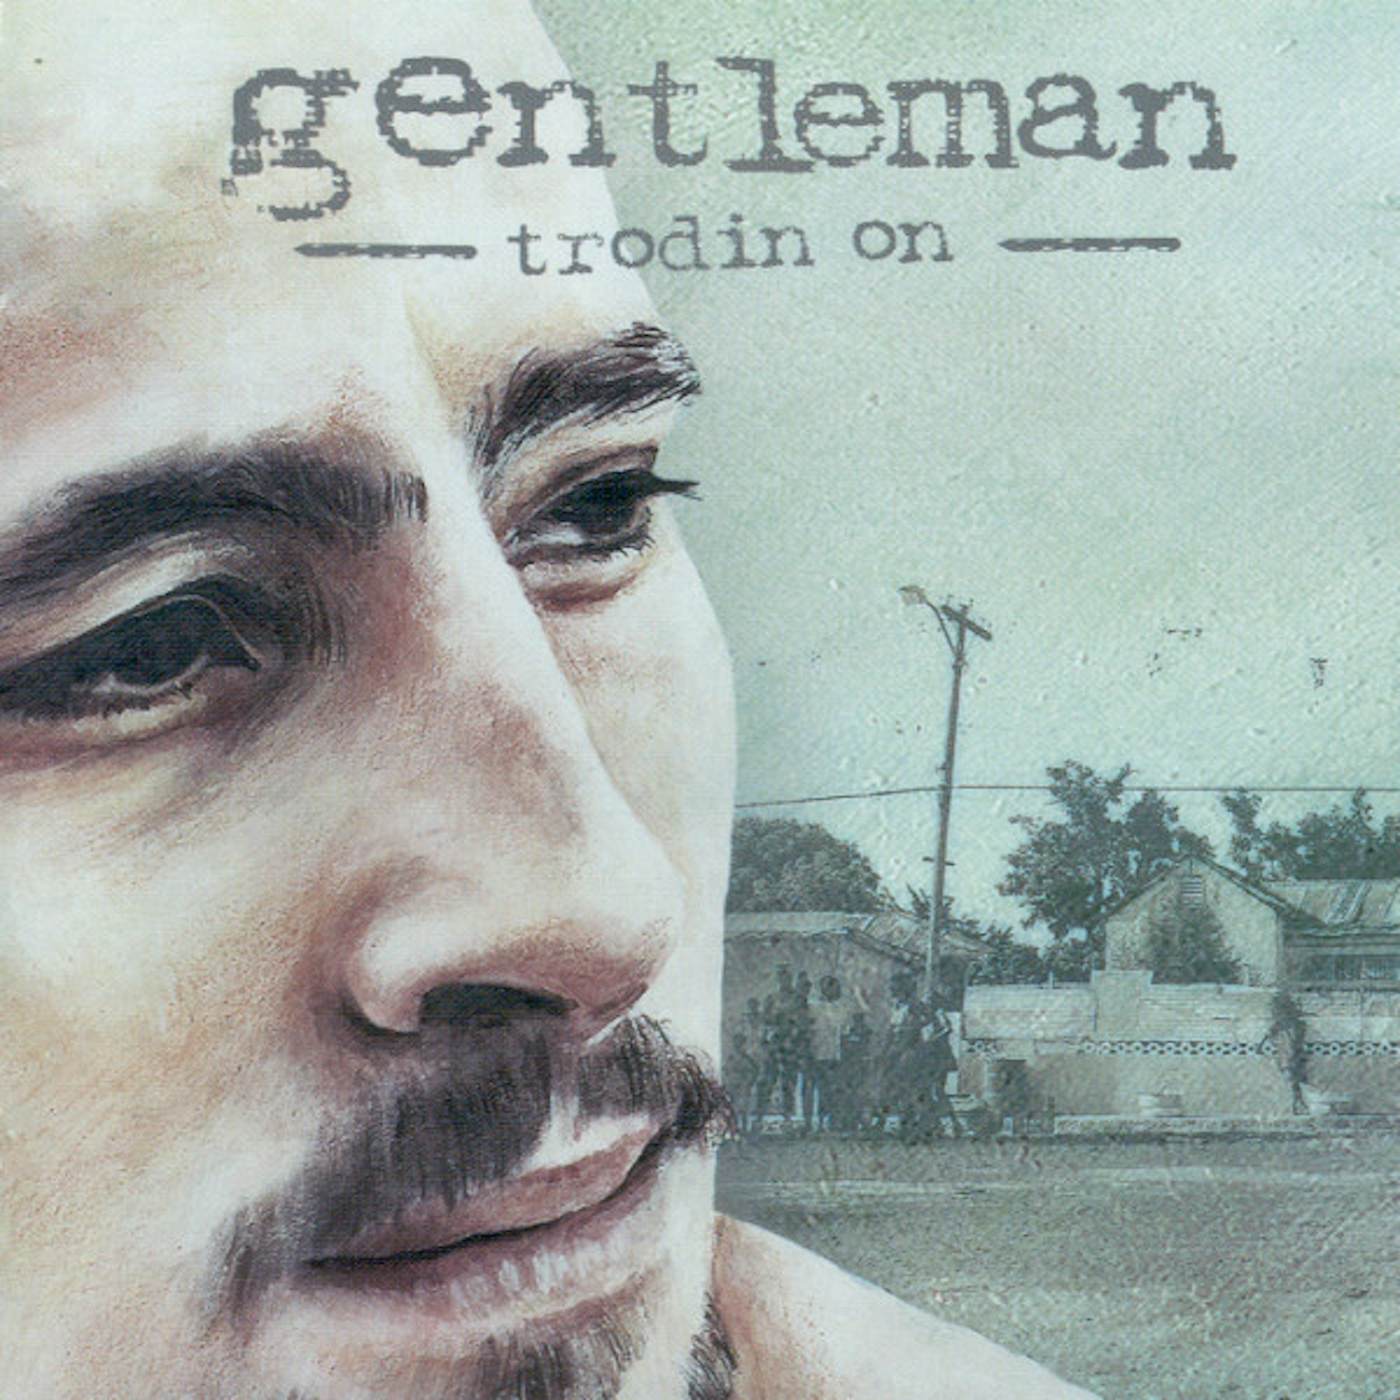 Gentleman TRODIN ON CD